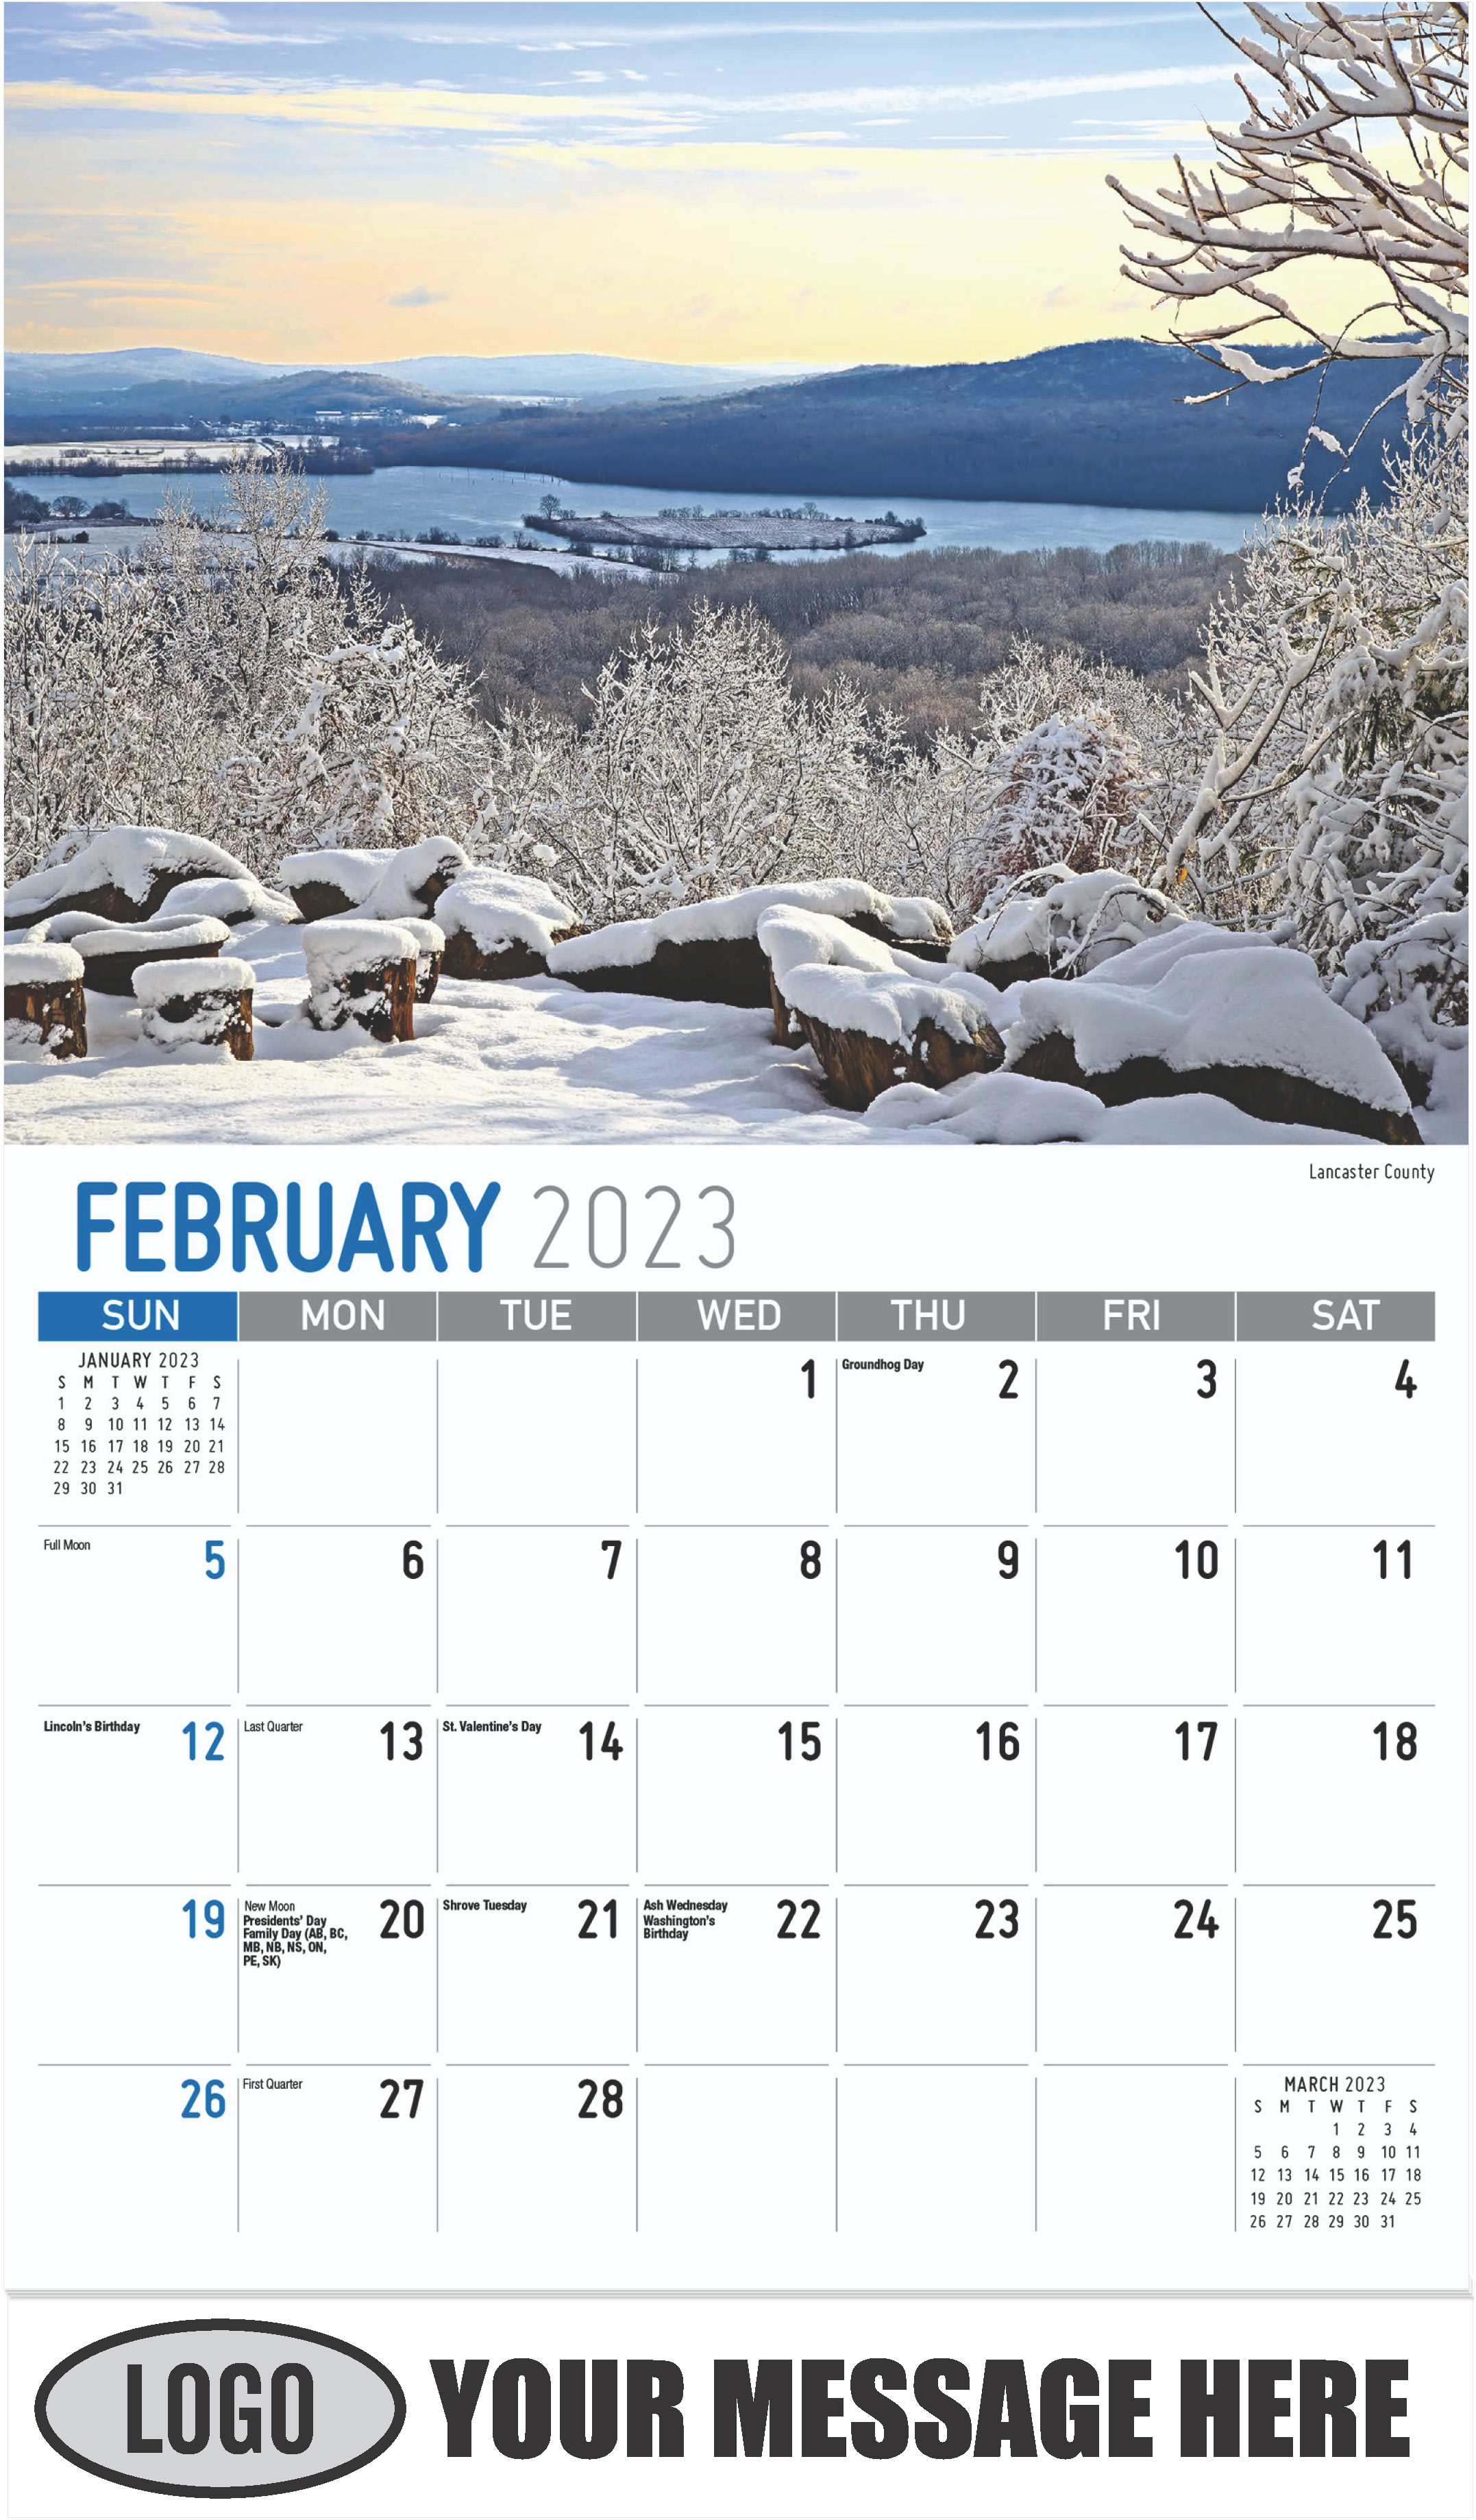 Lancaster County - February - Scenes of Pennsylvania 2023 Promotional Calendar